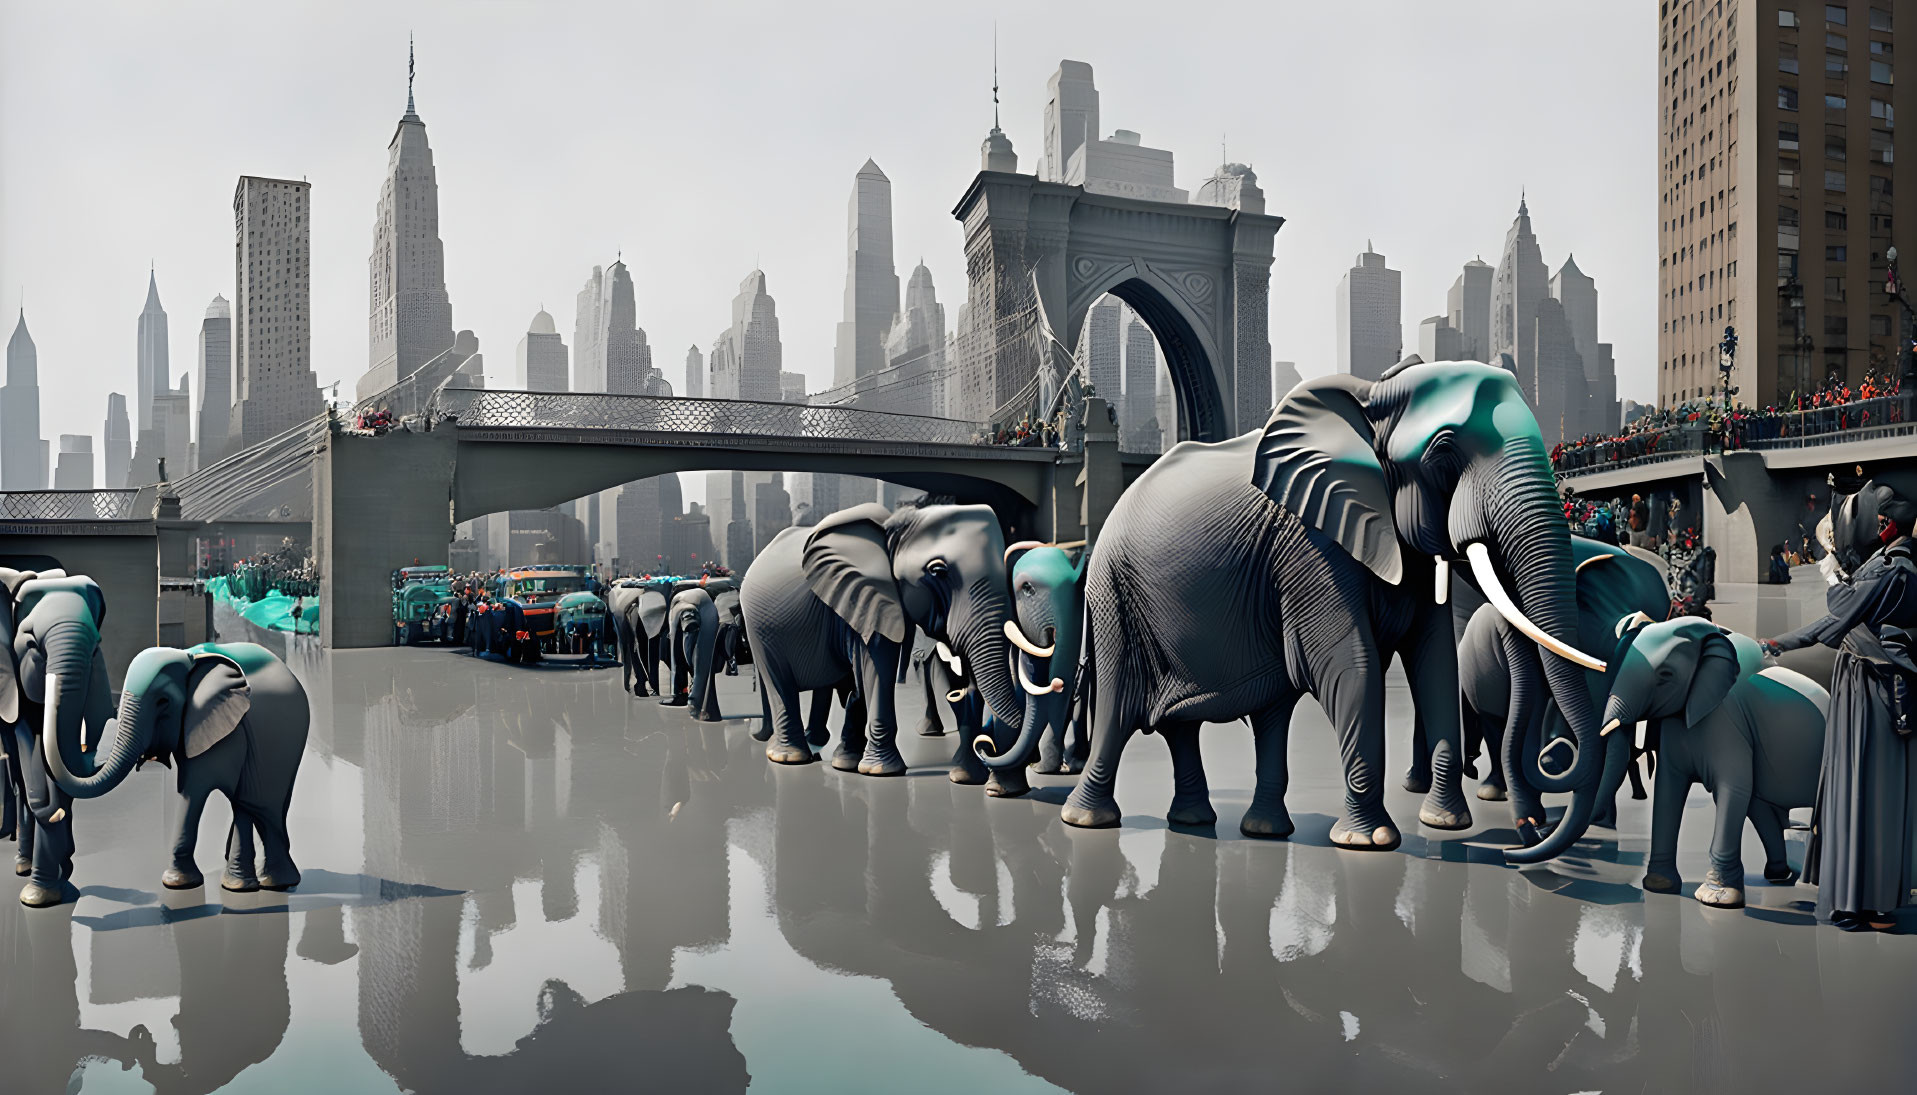 Elephants crossing city bridge with skyscrapers and onlookers